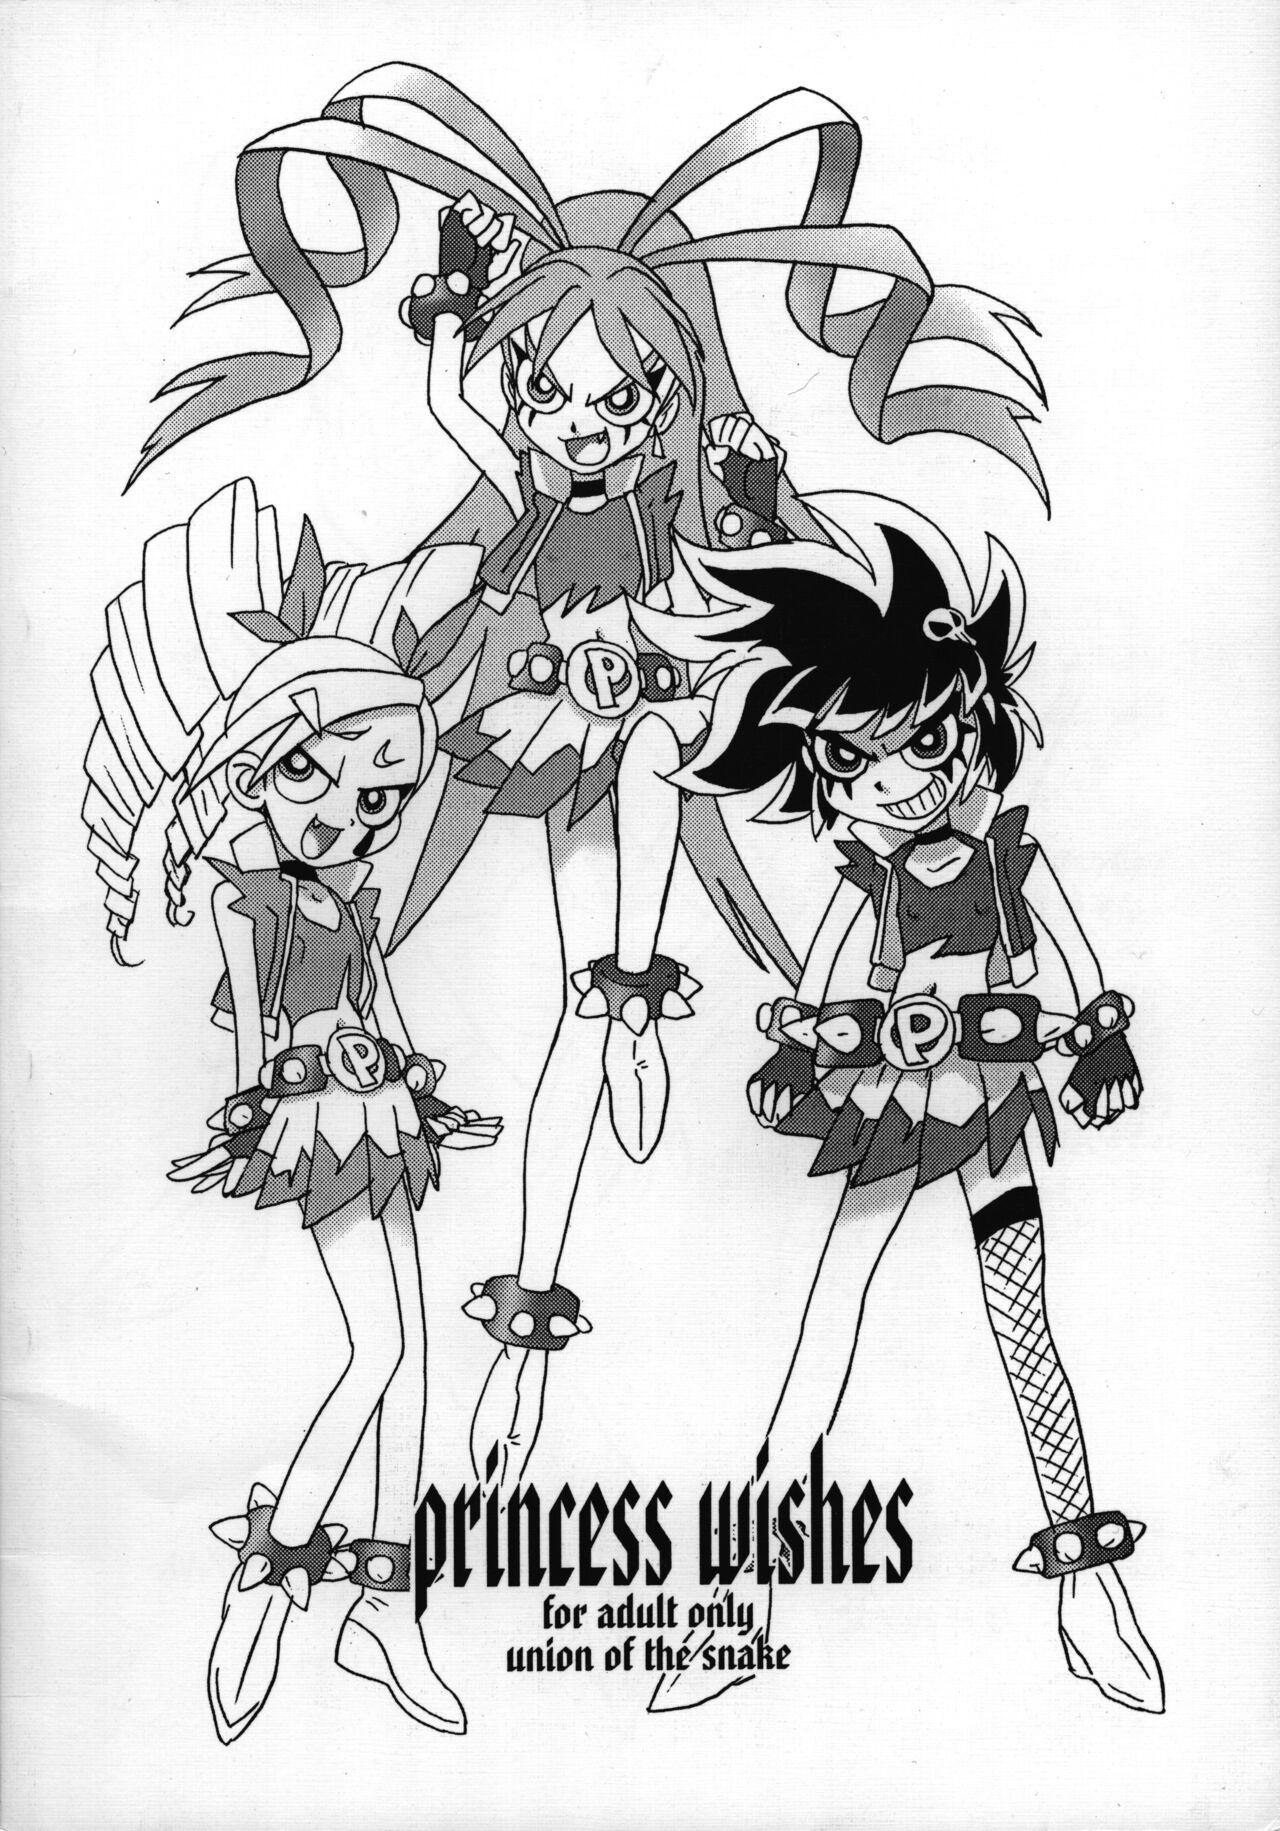 Wives princess wishes - Powerpuff girls z | demashita powerpuff girls z Hoe - Page 44